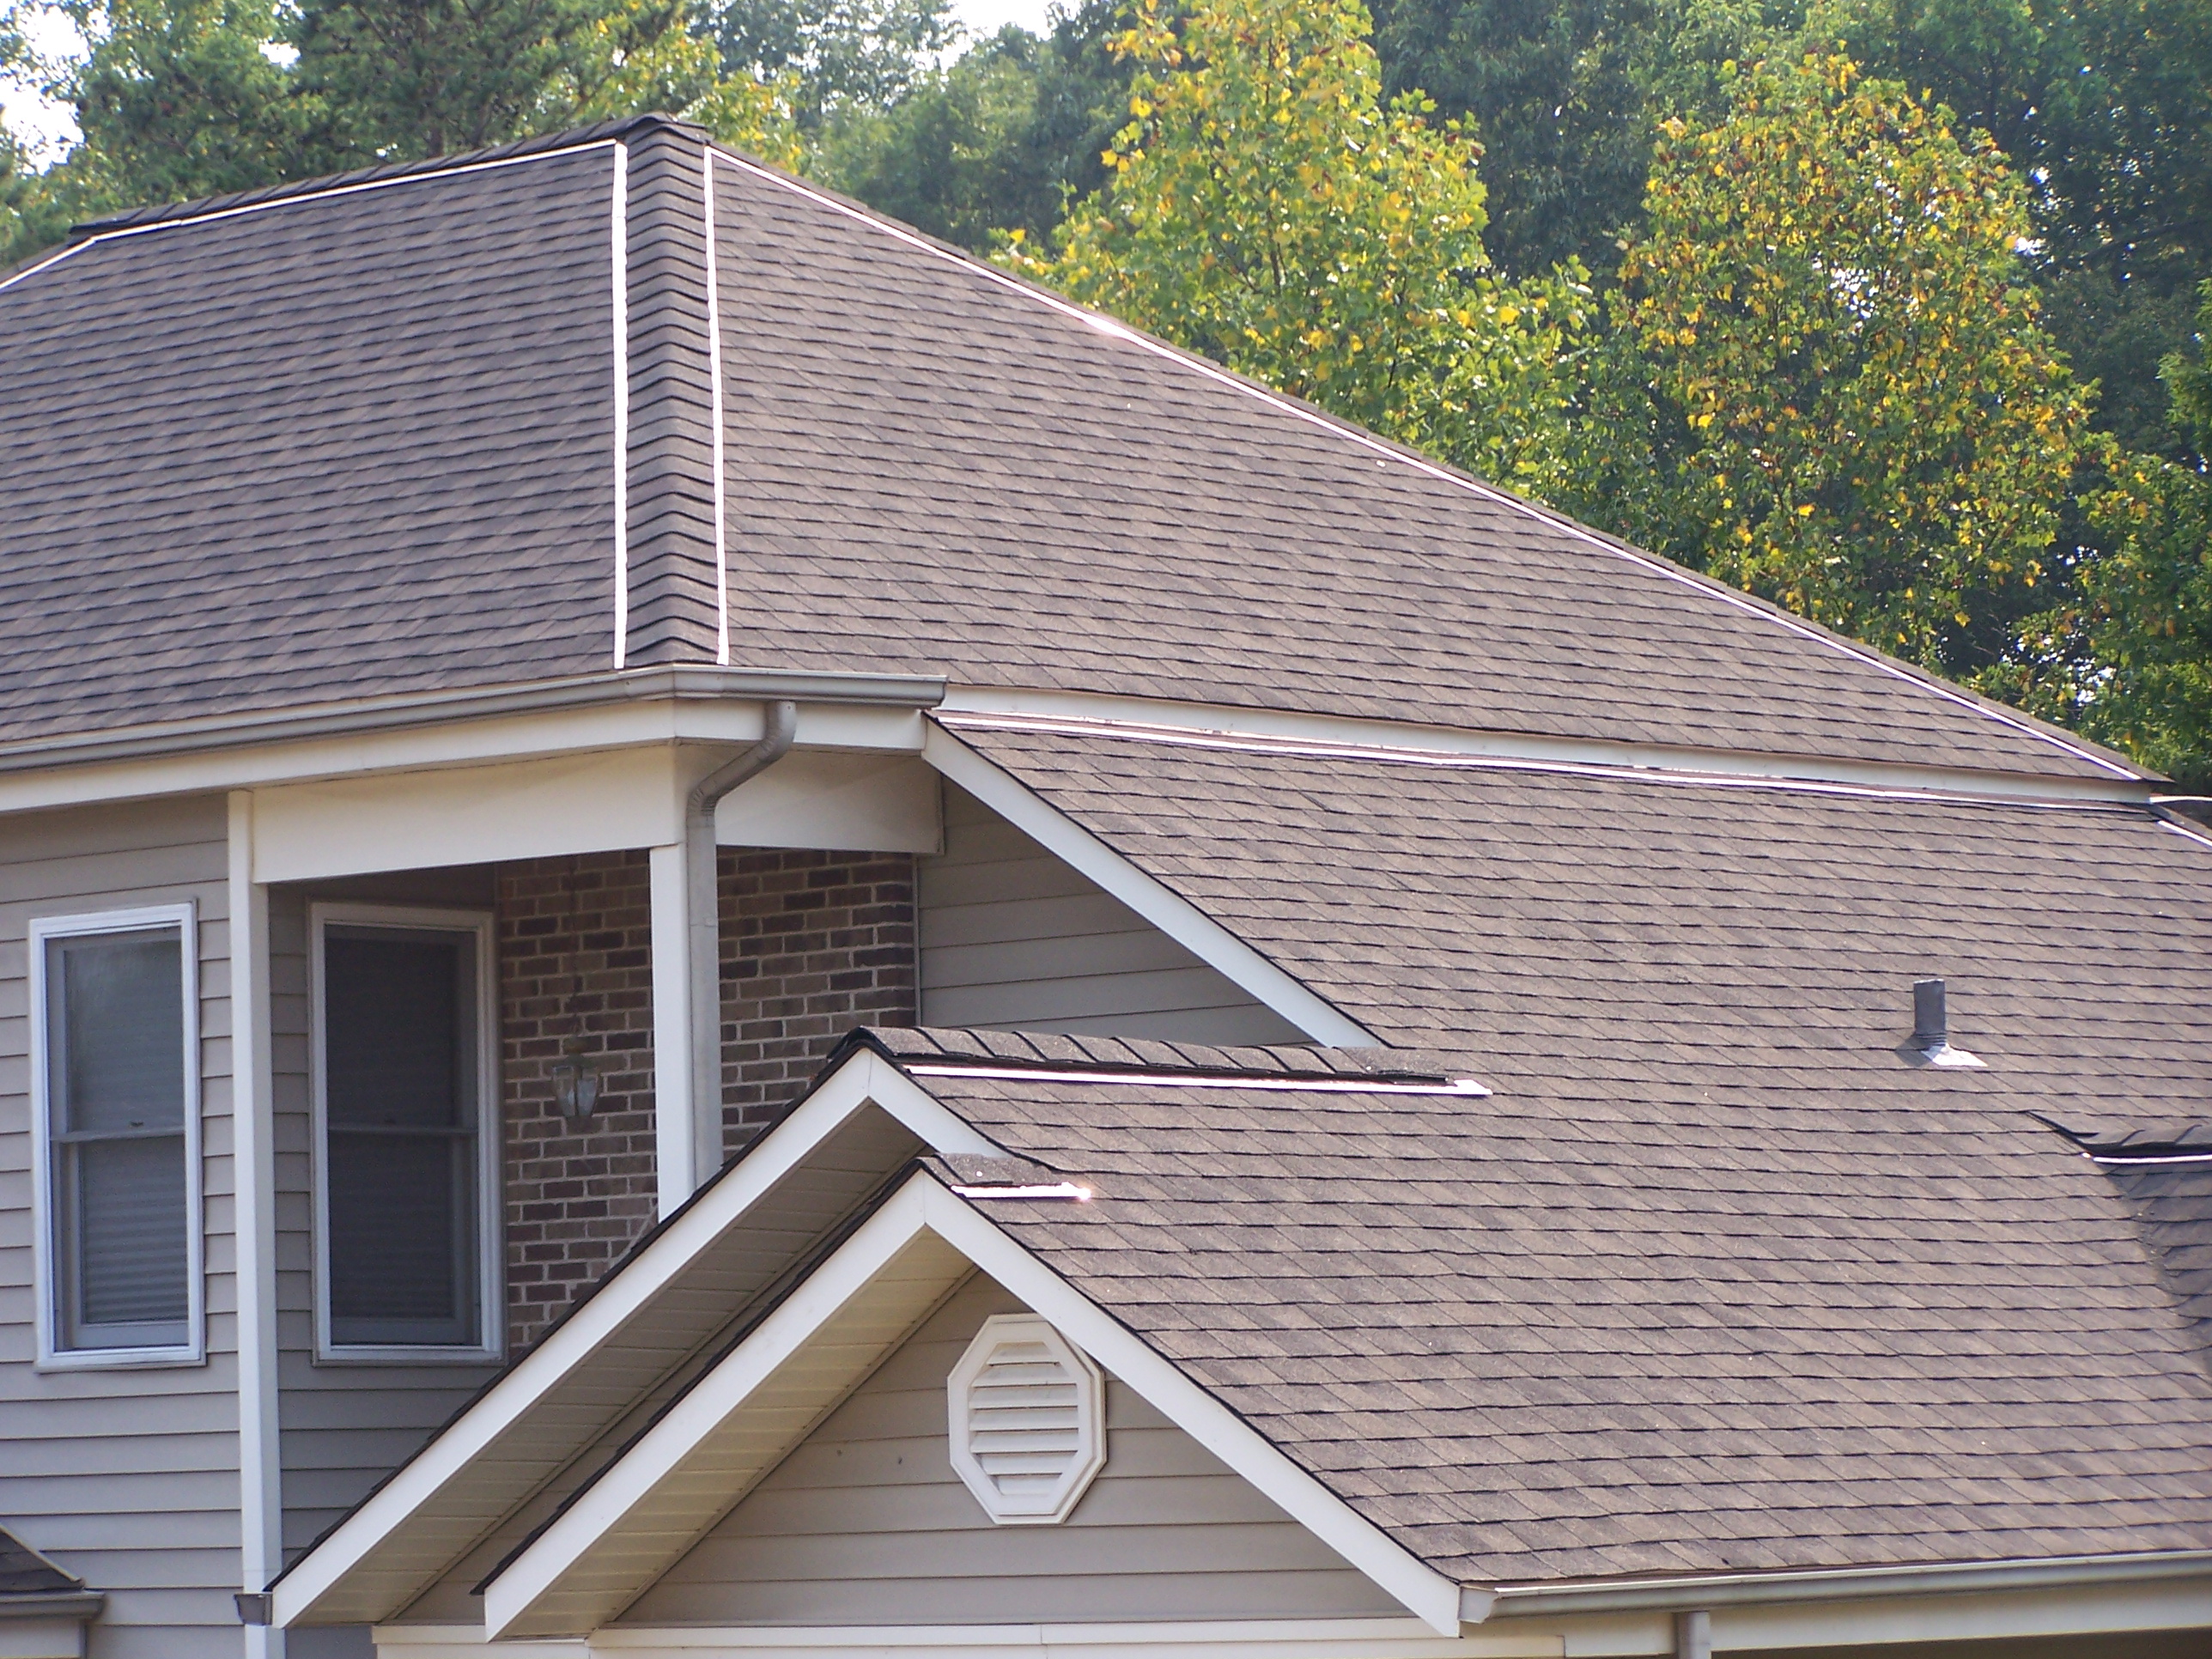 Certainteed Landmark Shingle Colors Pridemark Roofing Co.